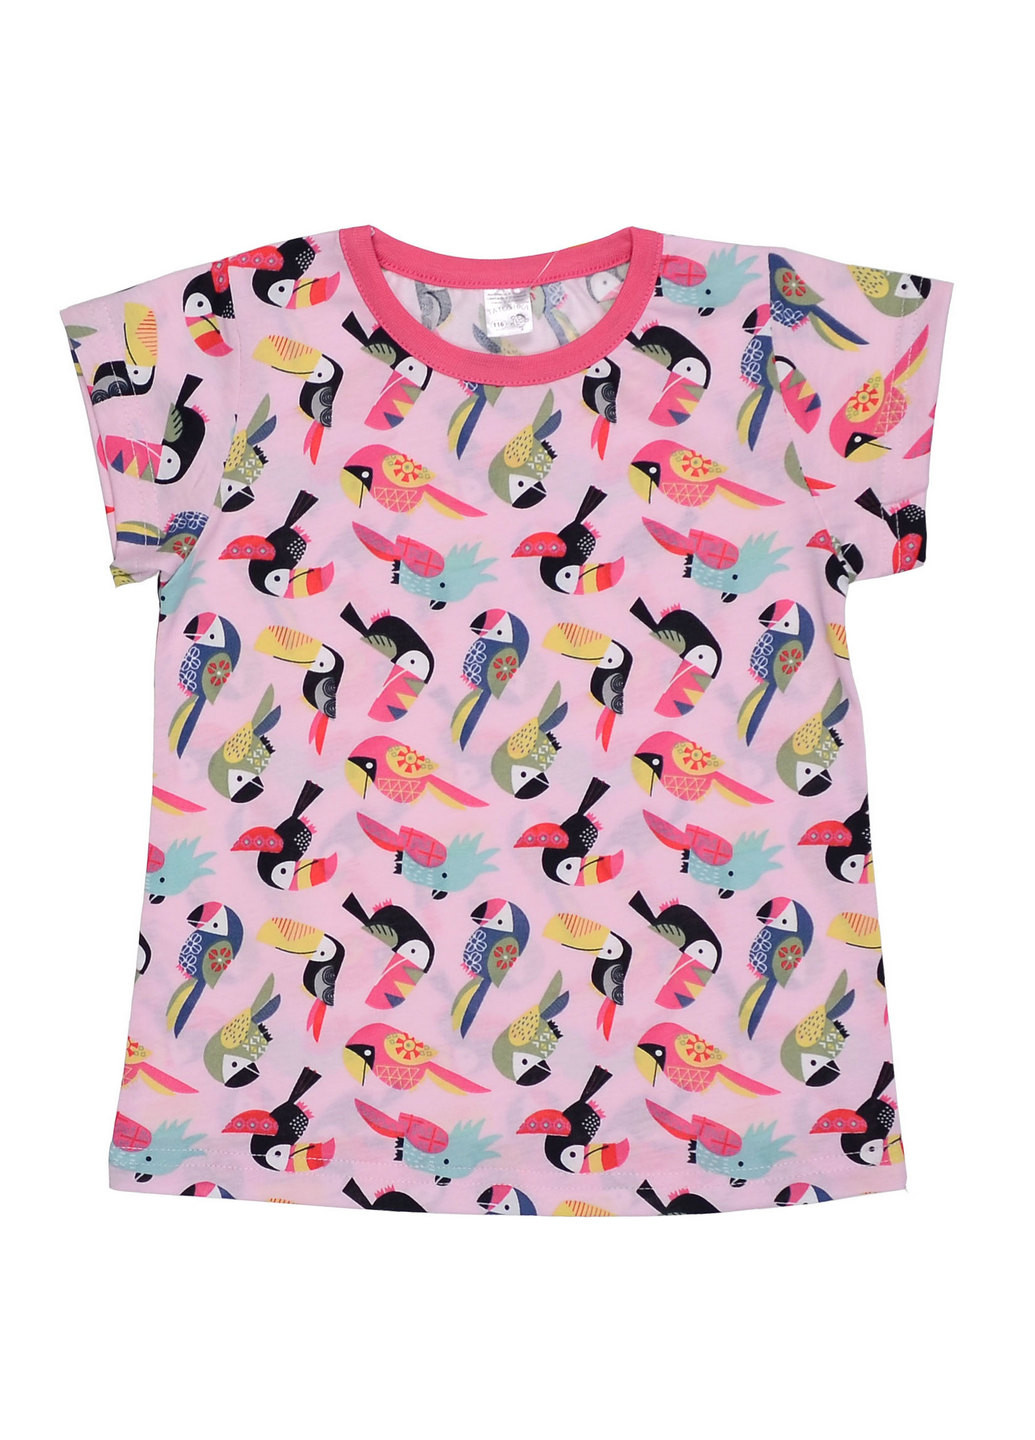 Розовая летняя футболка для девочки Татошка